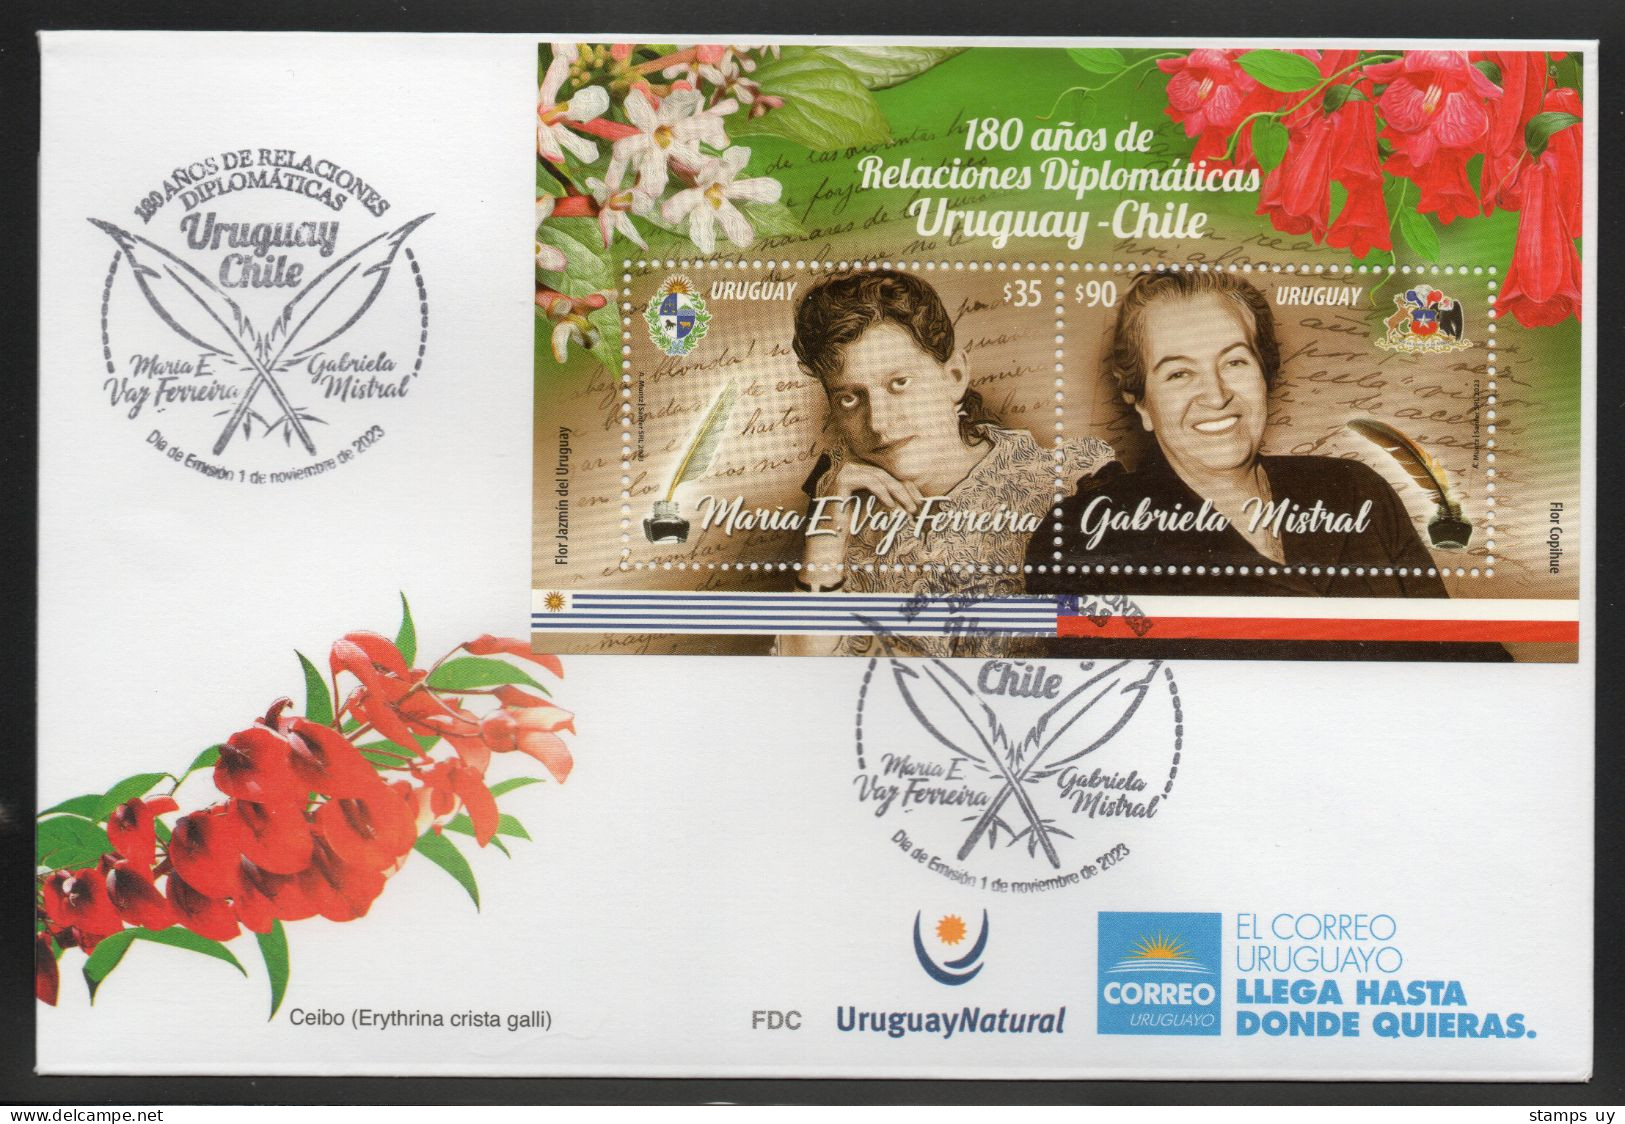 URUGUAY 2023 (Diplomacy, Chile, Poets, M E Vaz Ferreira, Gabriela Mistral, Nobel Prize, Literature, Flowers) - 1 FDC - Briefmarken